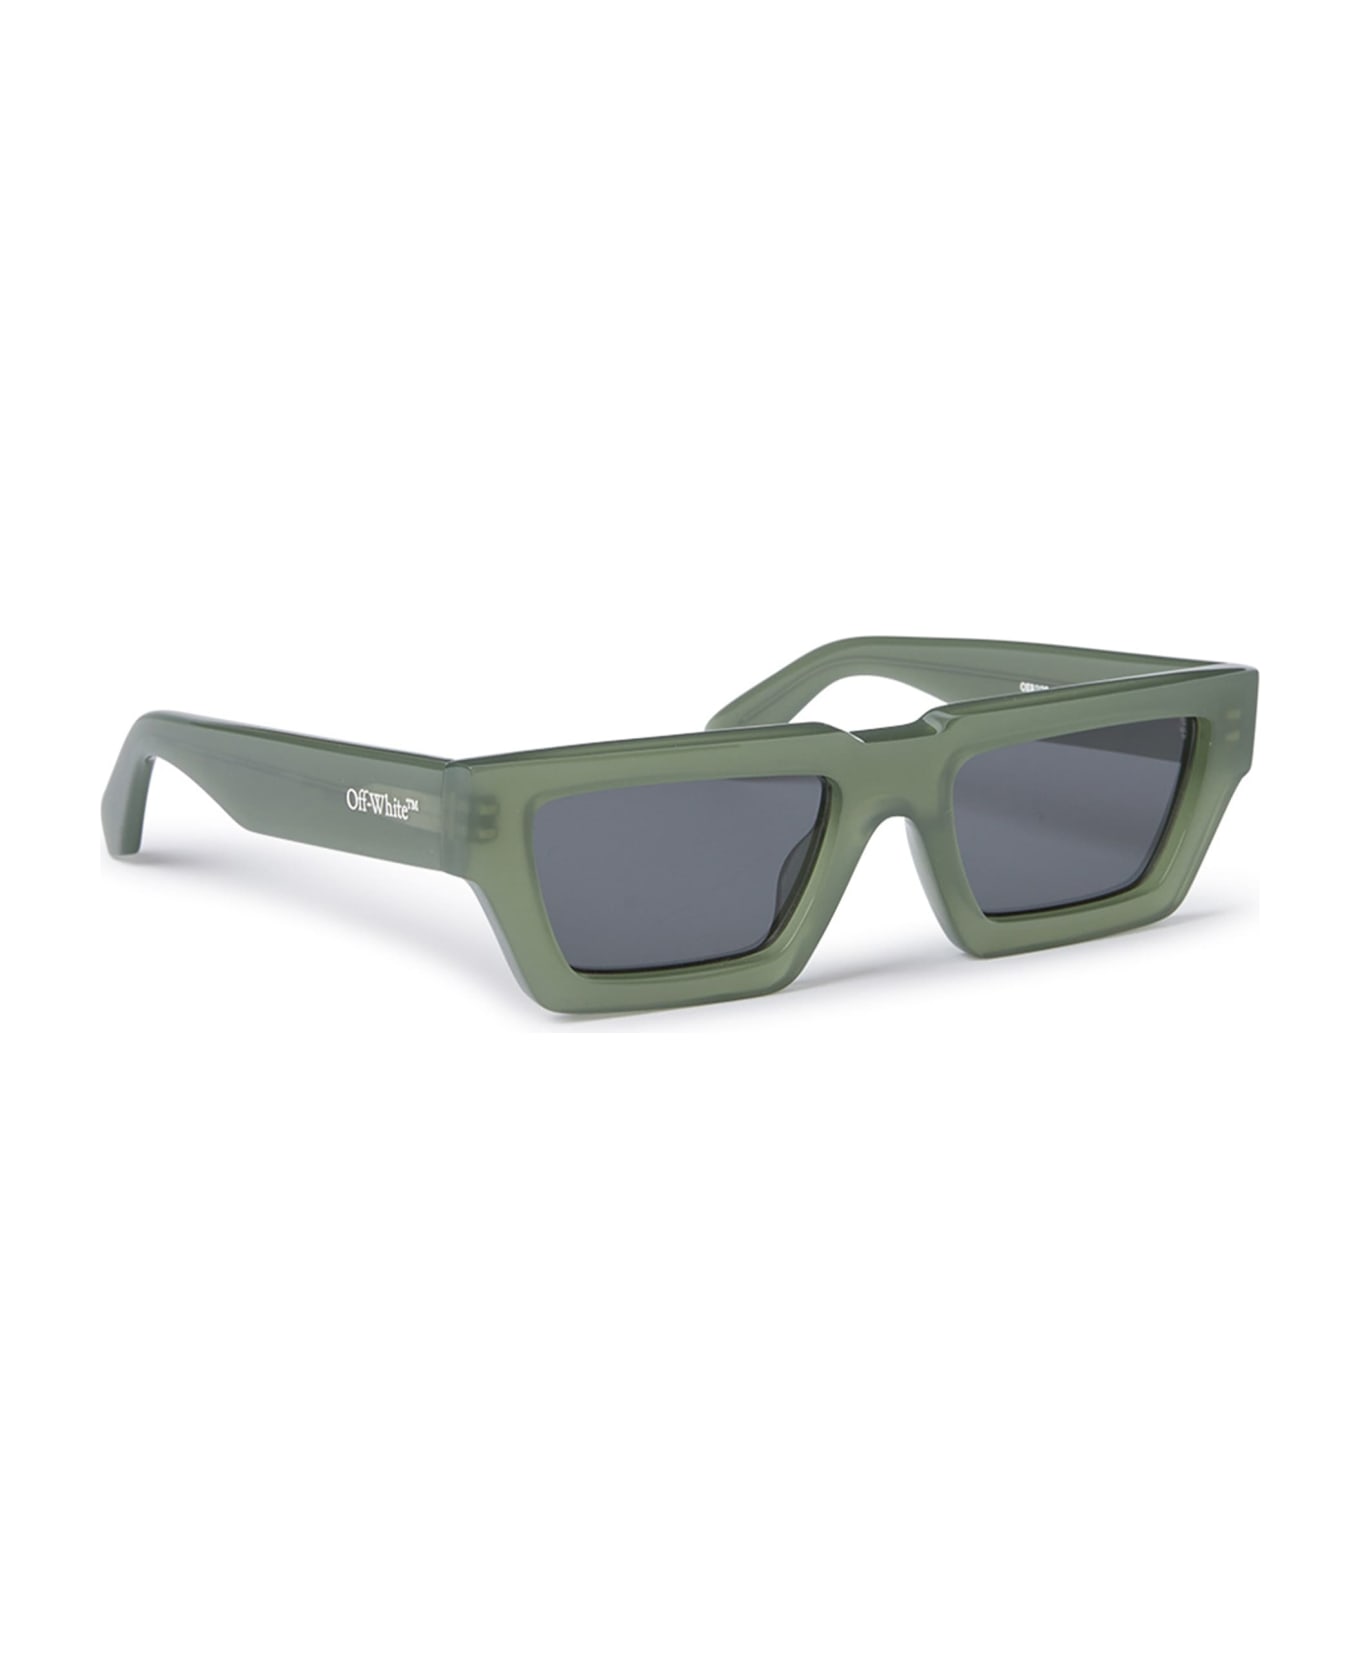 Off-White Manchester - Olive Green / Dark Grey Sunglasses - green サングラス